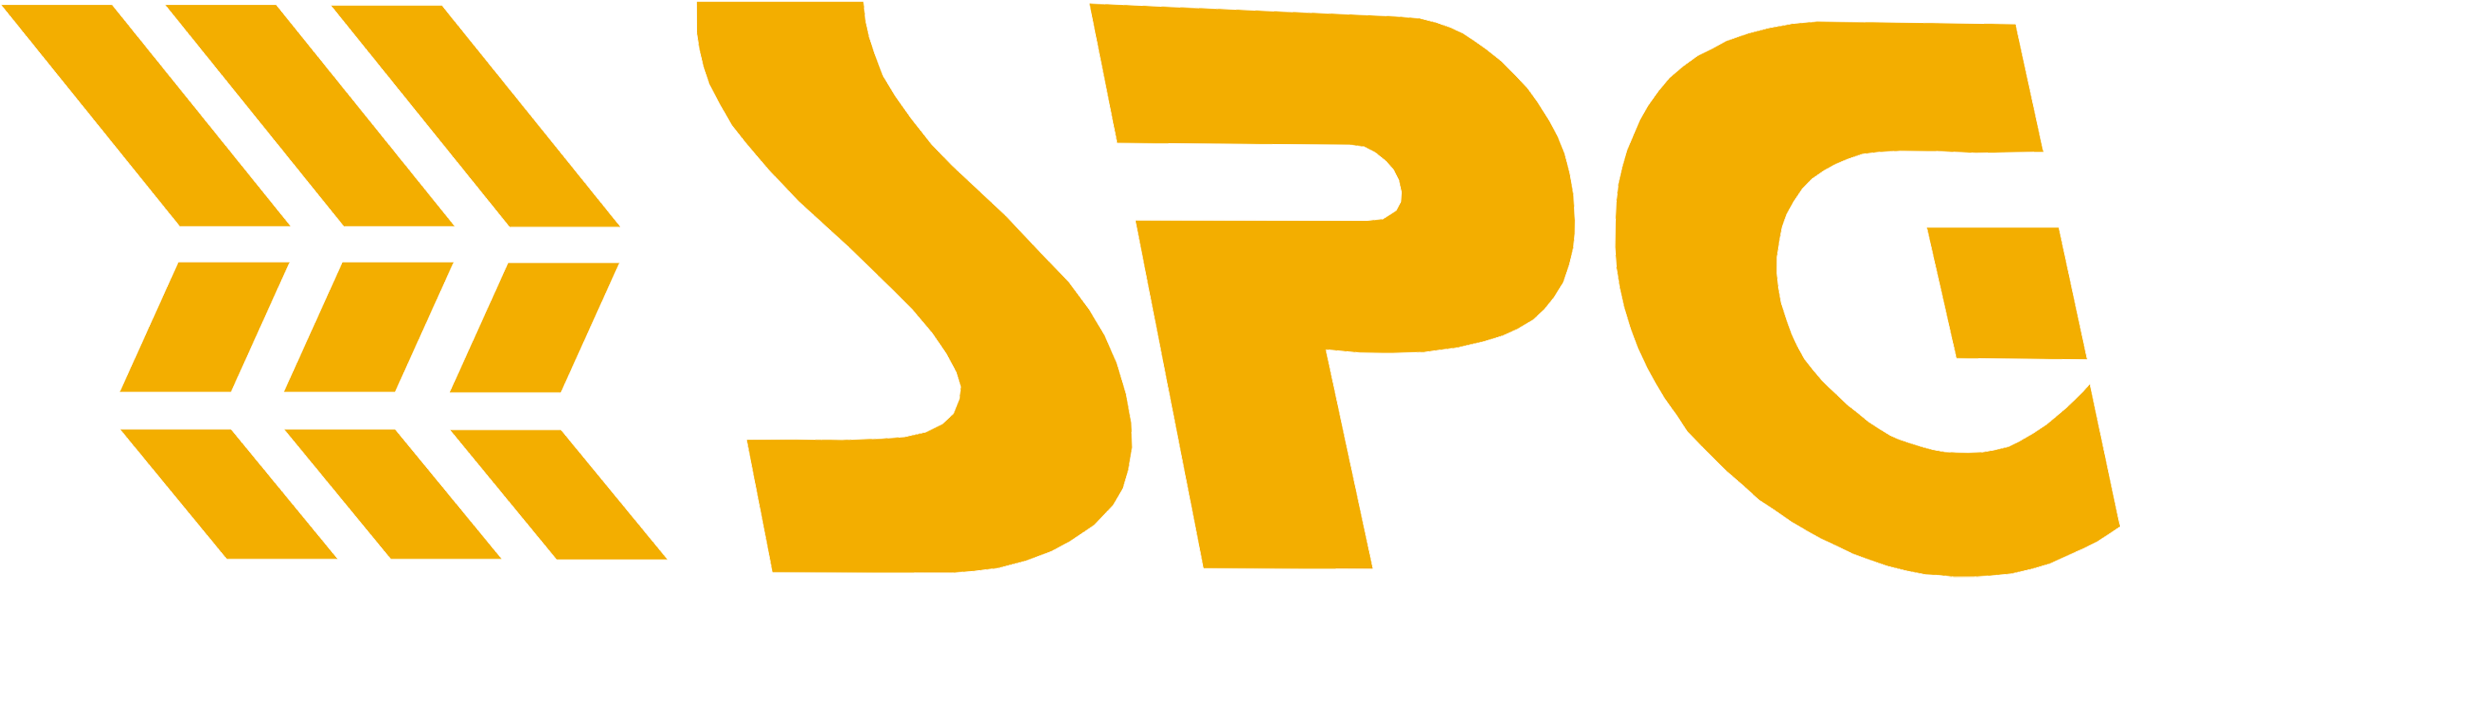 S P G Pneumatic Solutions Logo